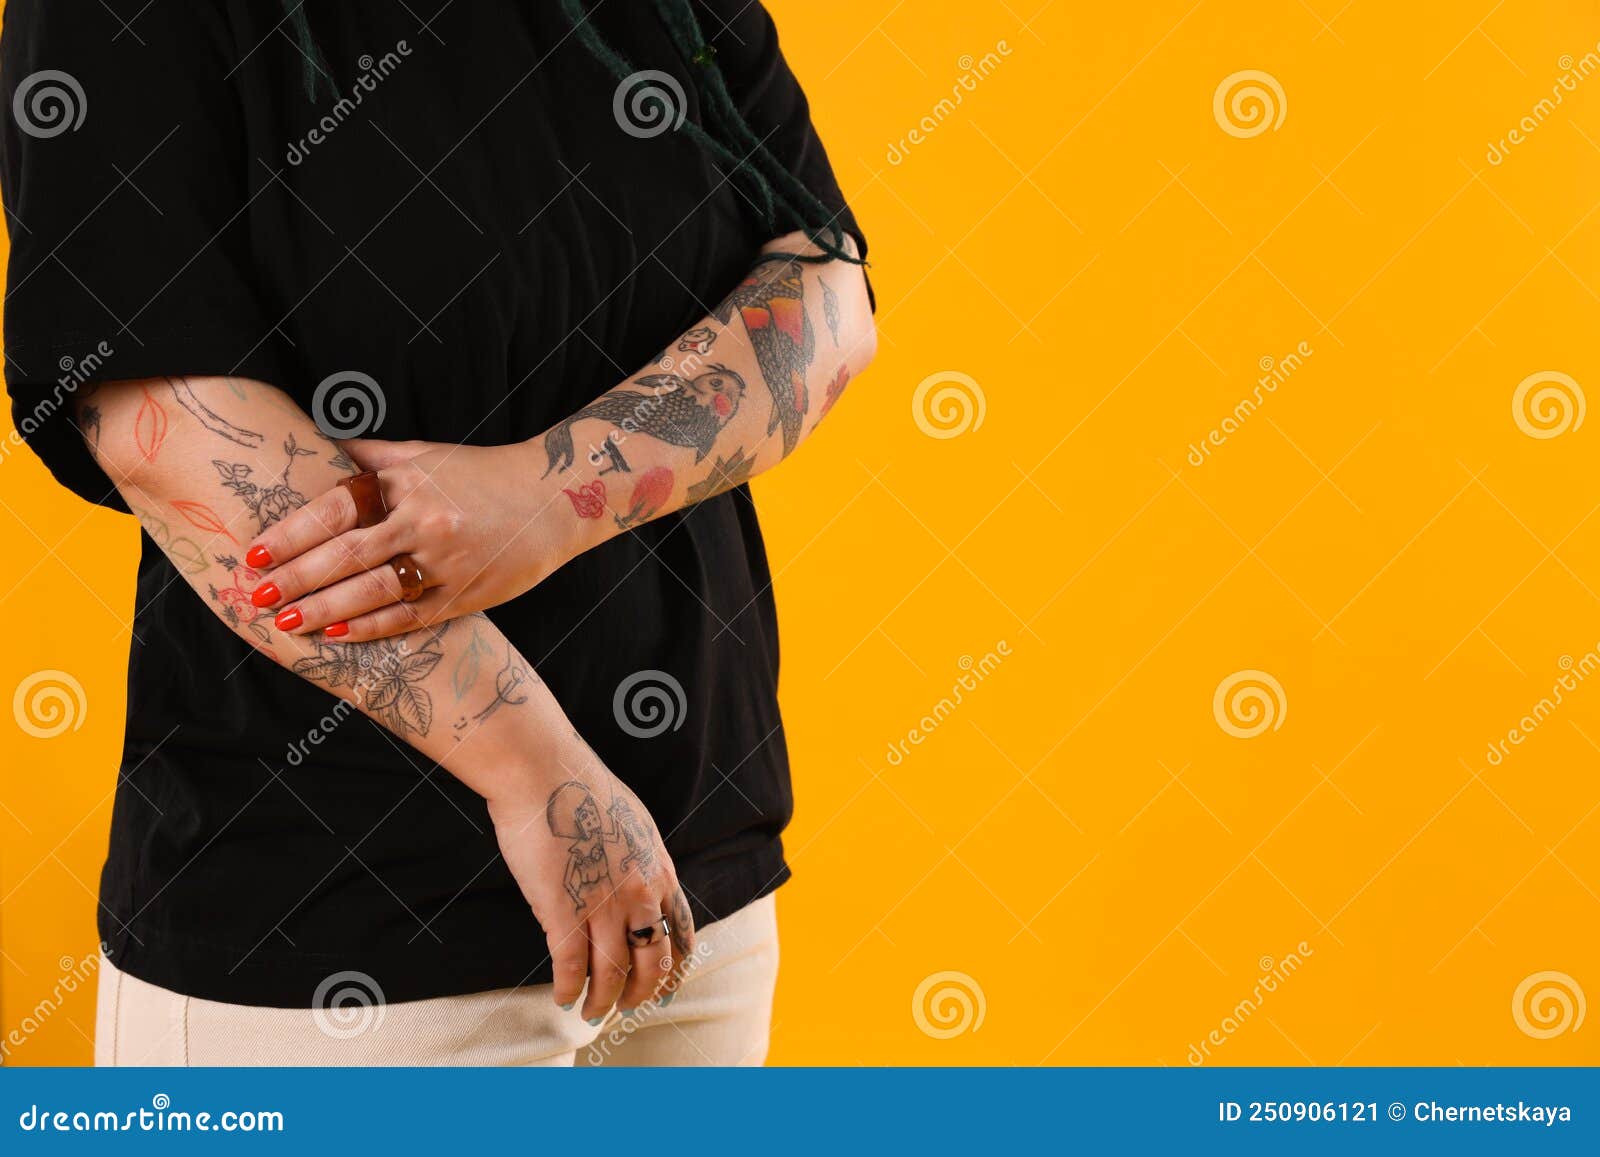 Tattoos Are Trashy”: Is There Still a Stigma Against Tattoos? — Joby Dorr